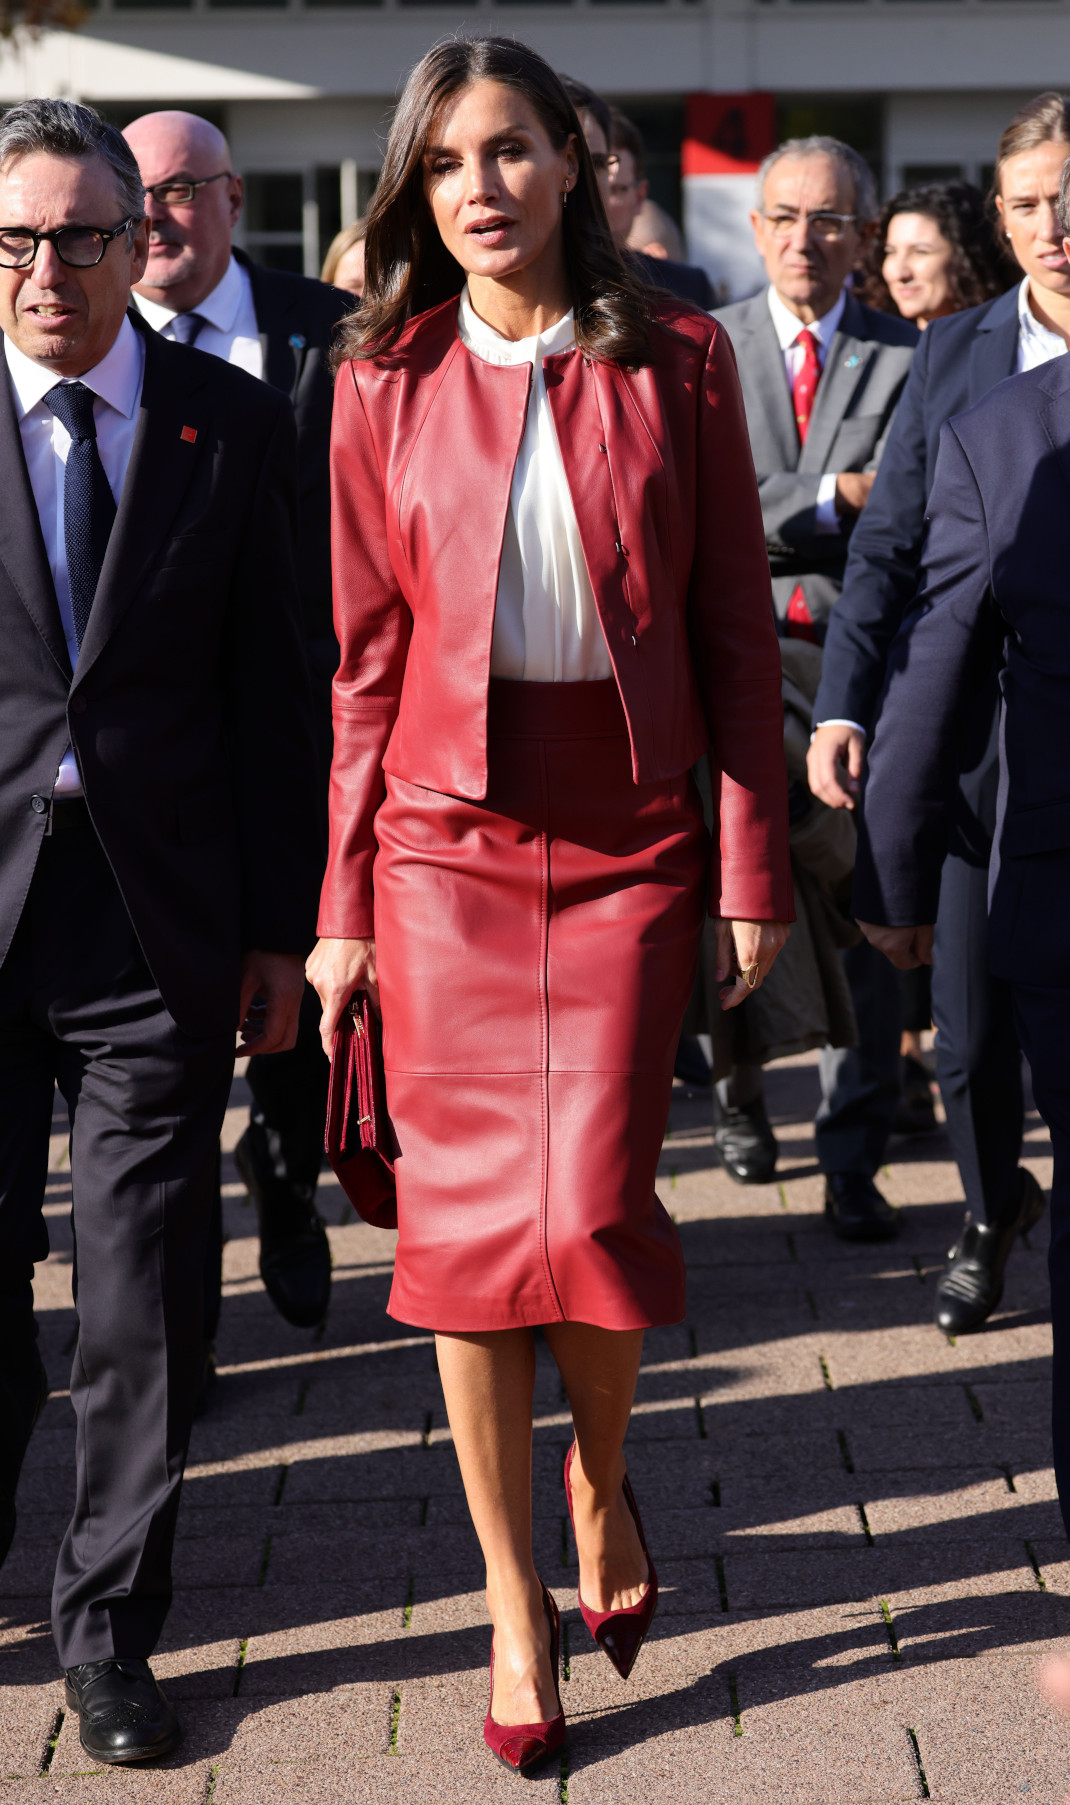 H βασίλισσα Λετίθια απογείωσε το look της με μια δερμάτινη pencil φούστα 